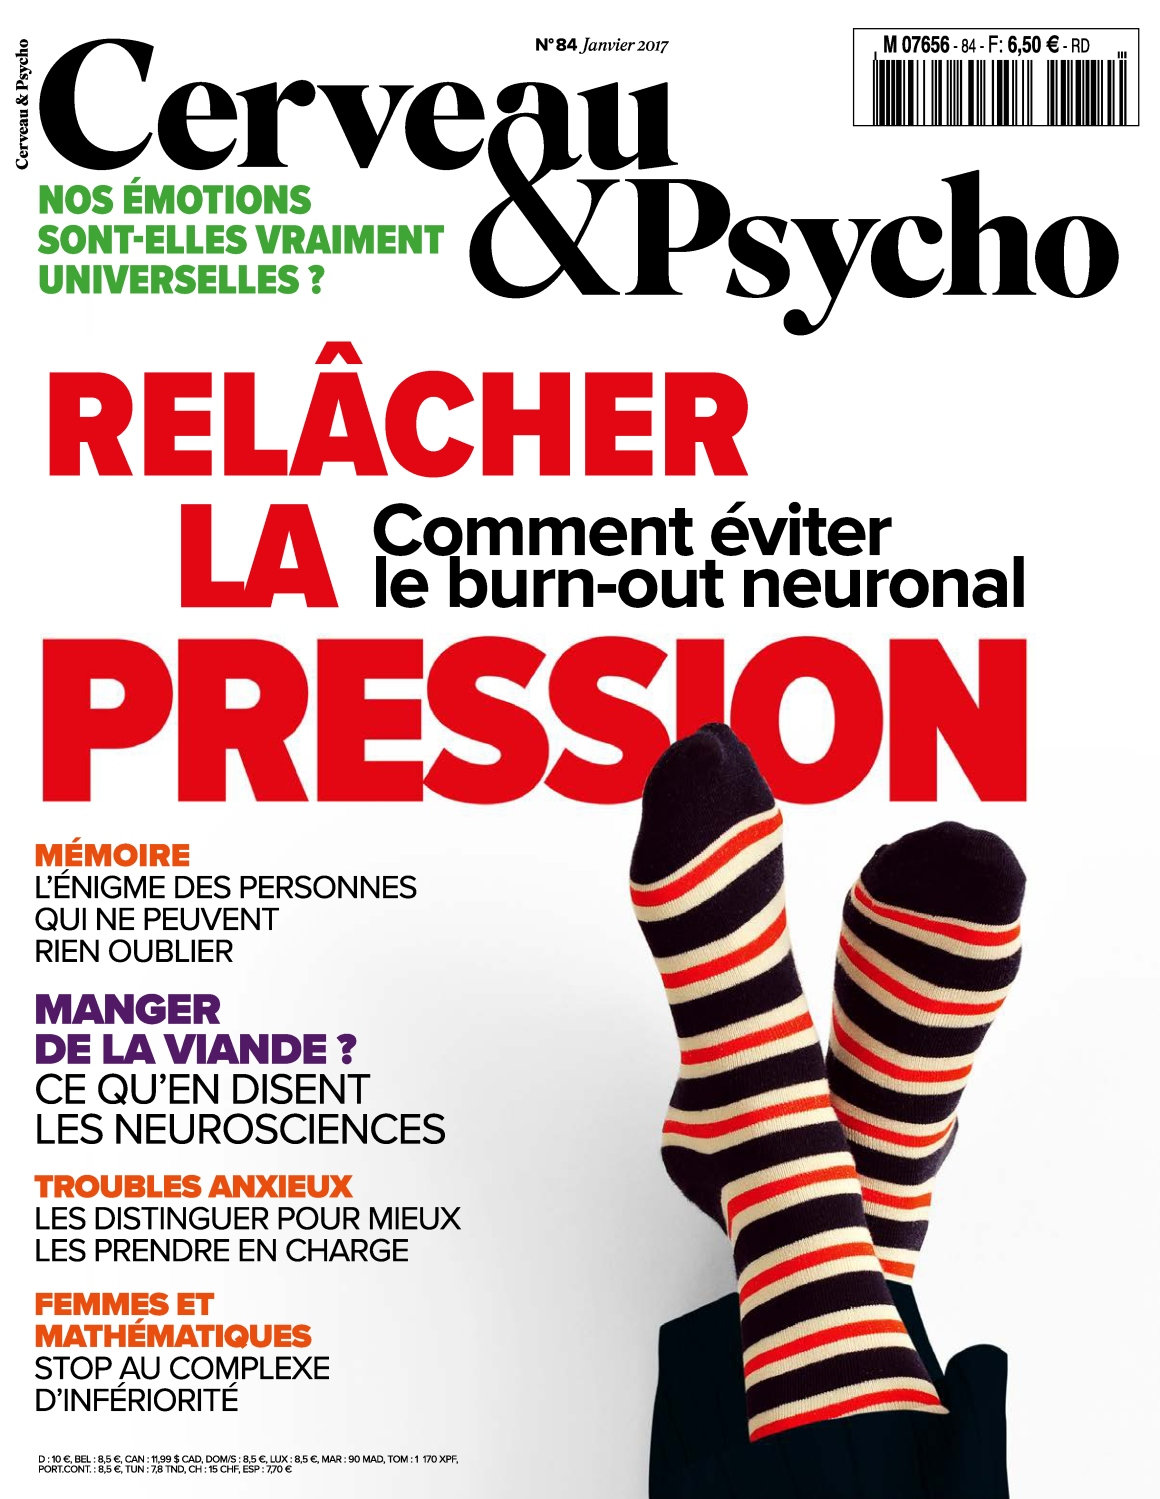 Cerveau & Psycho N°84 - Janvier 2017 